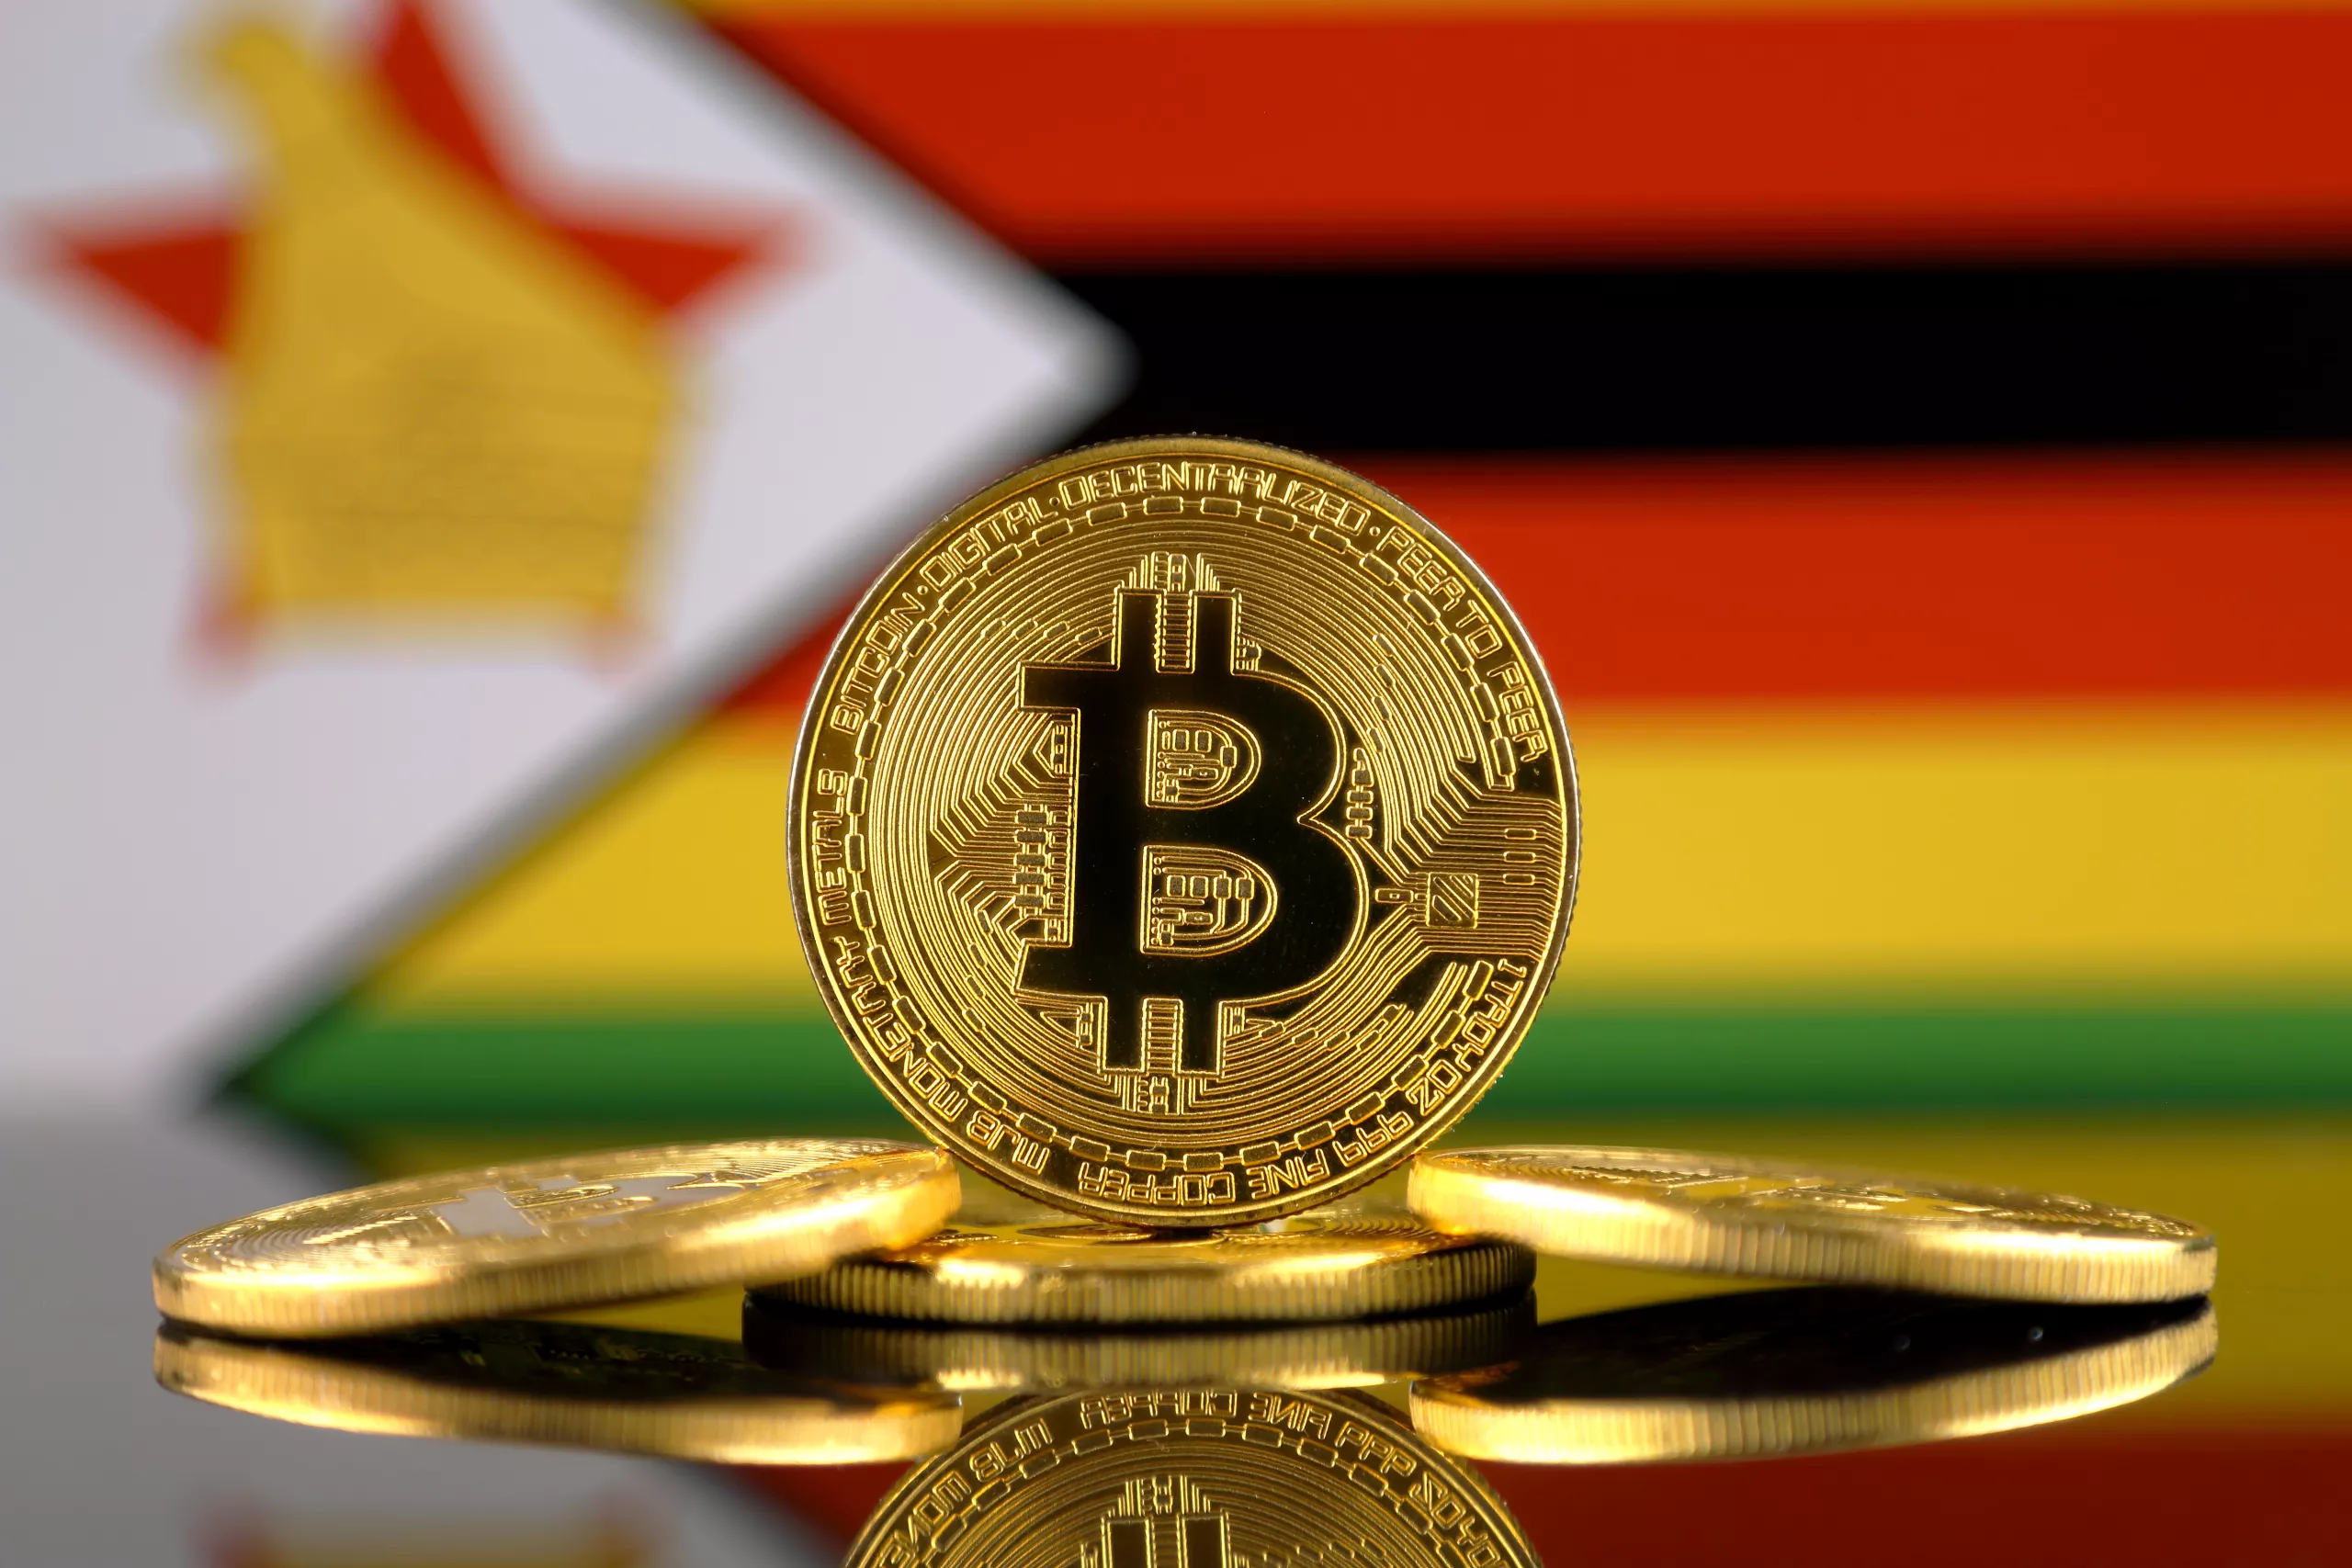 Physical version of Bitcoin (BTC) and Zimbabwe Flag